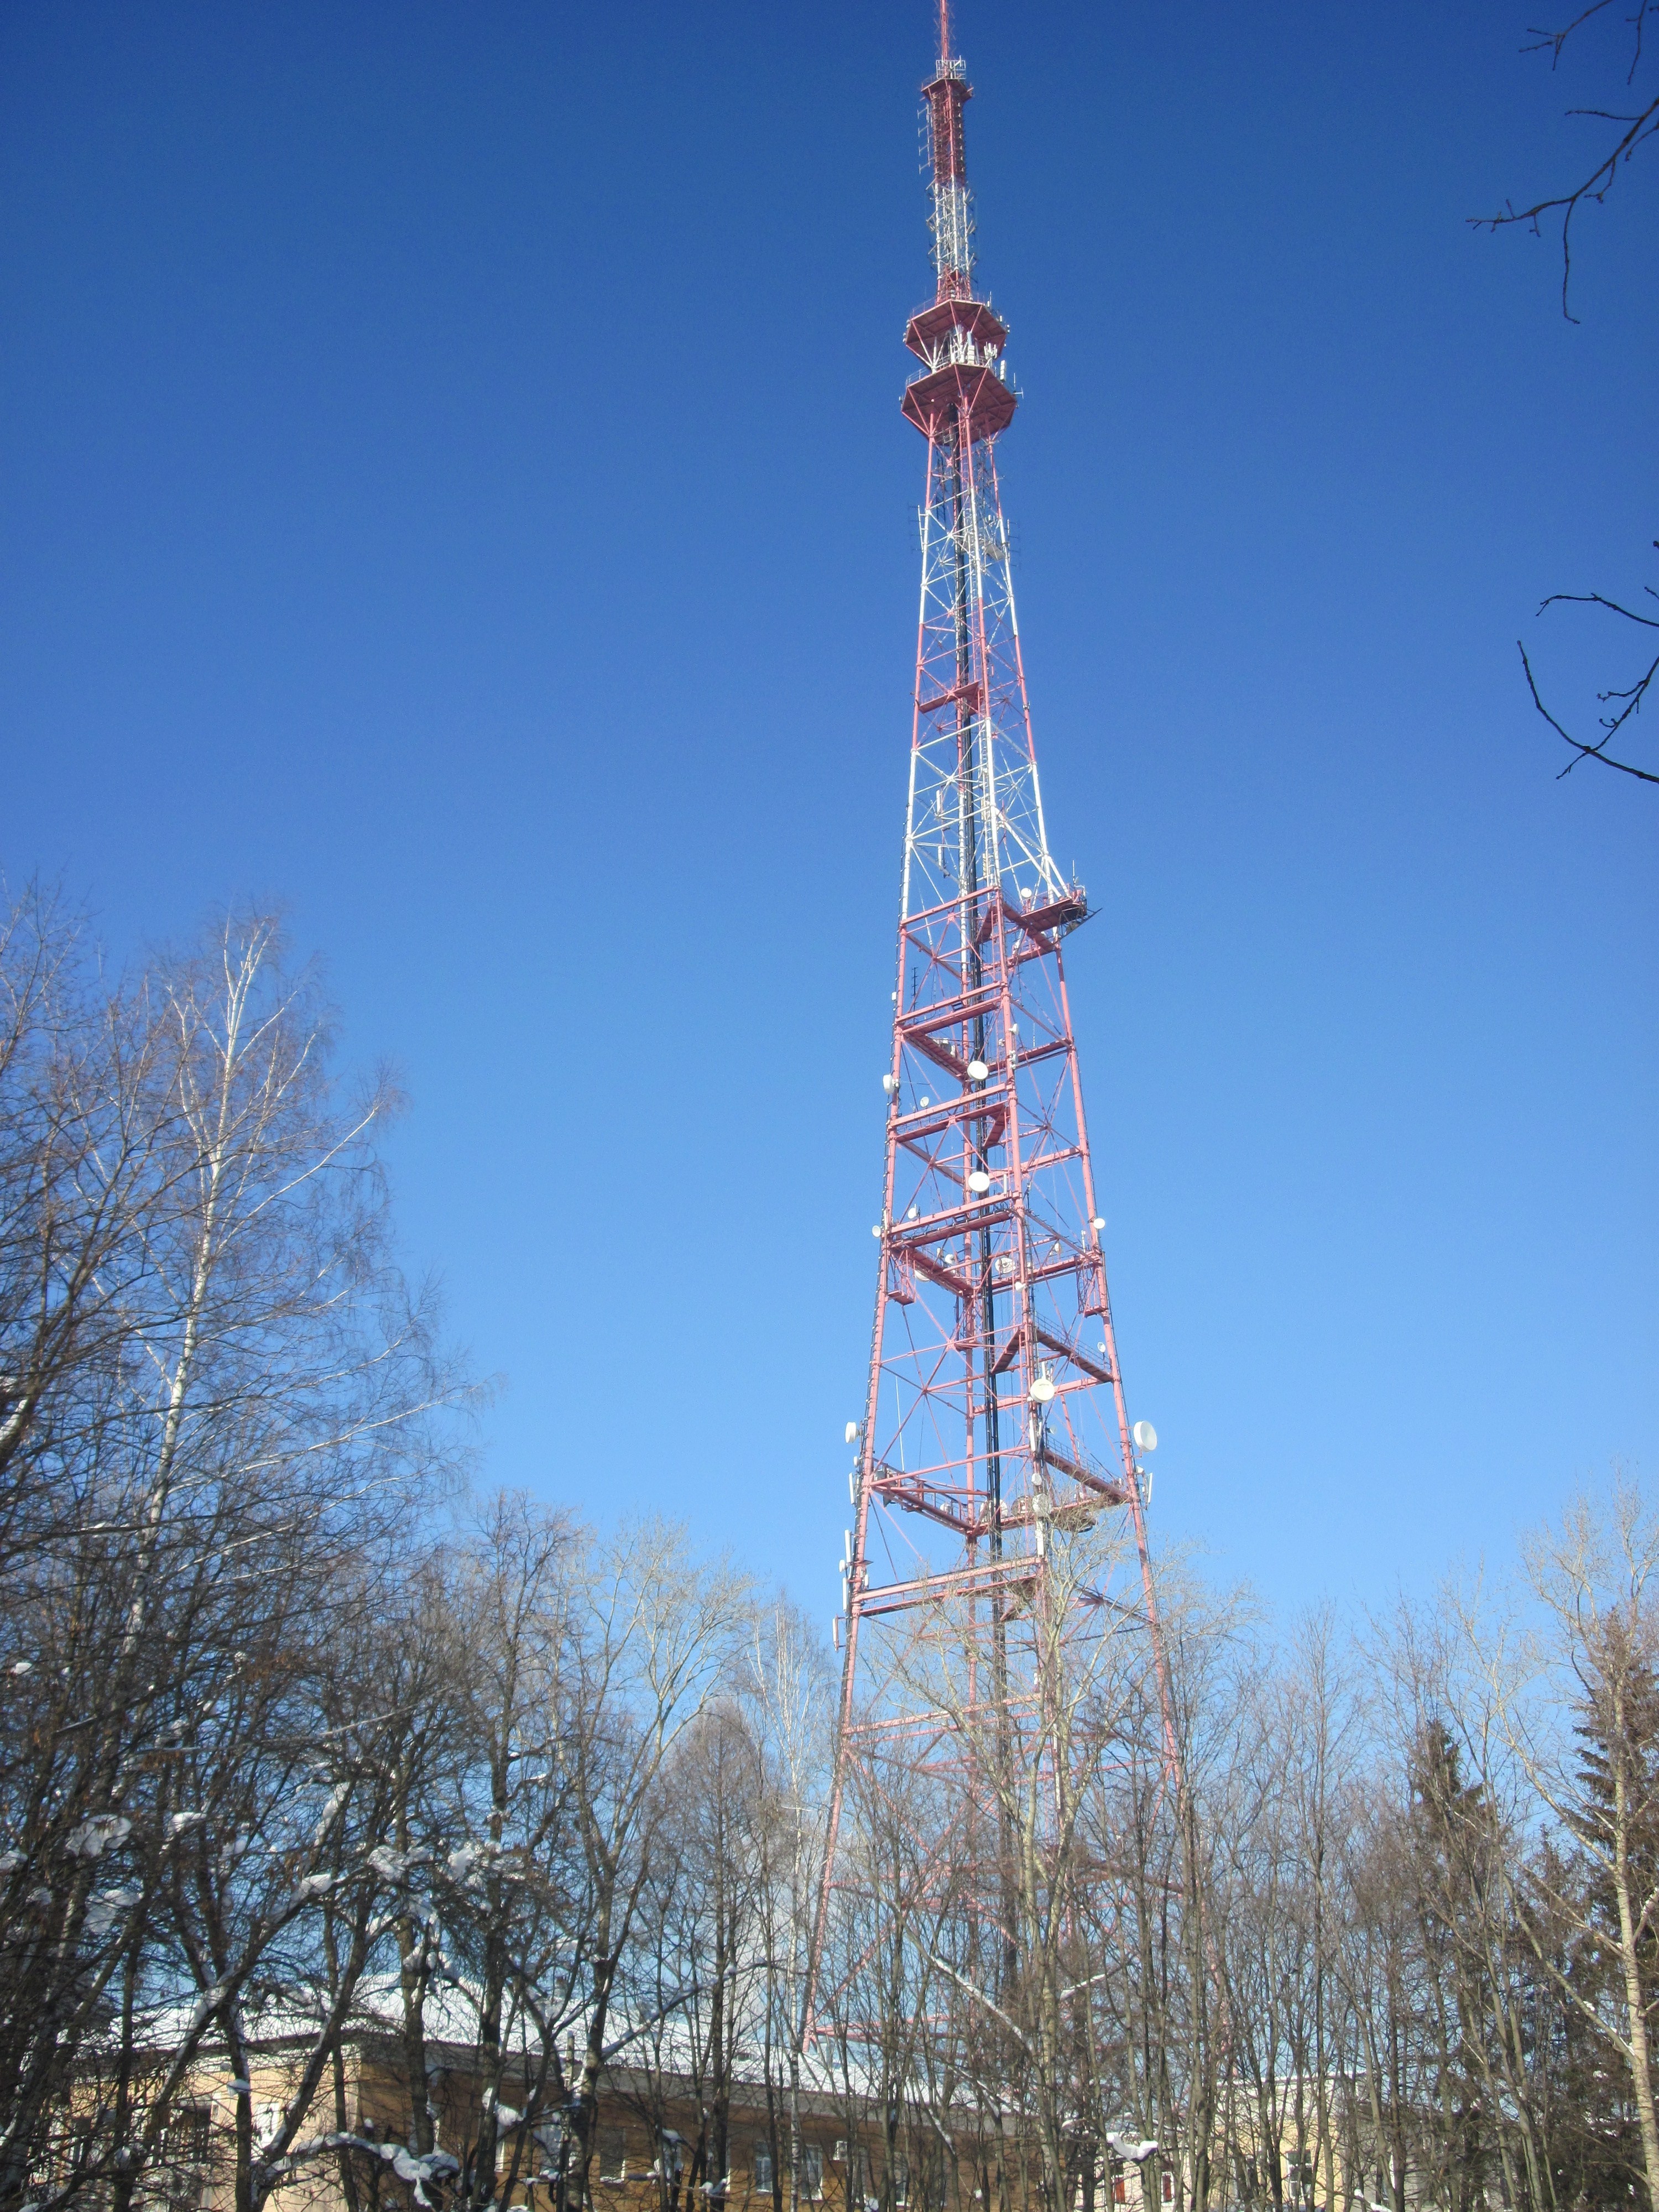 Radio masts and towers